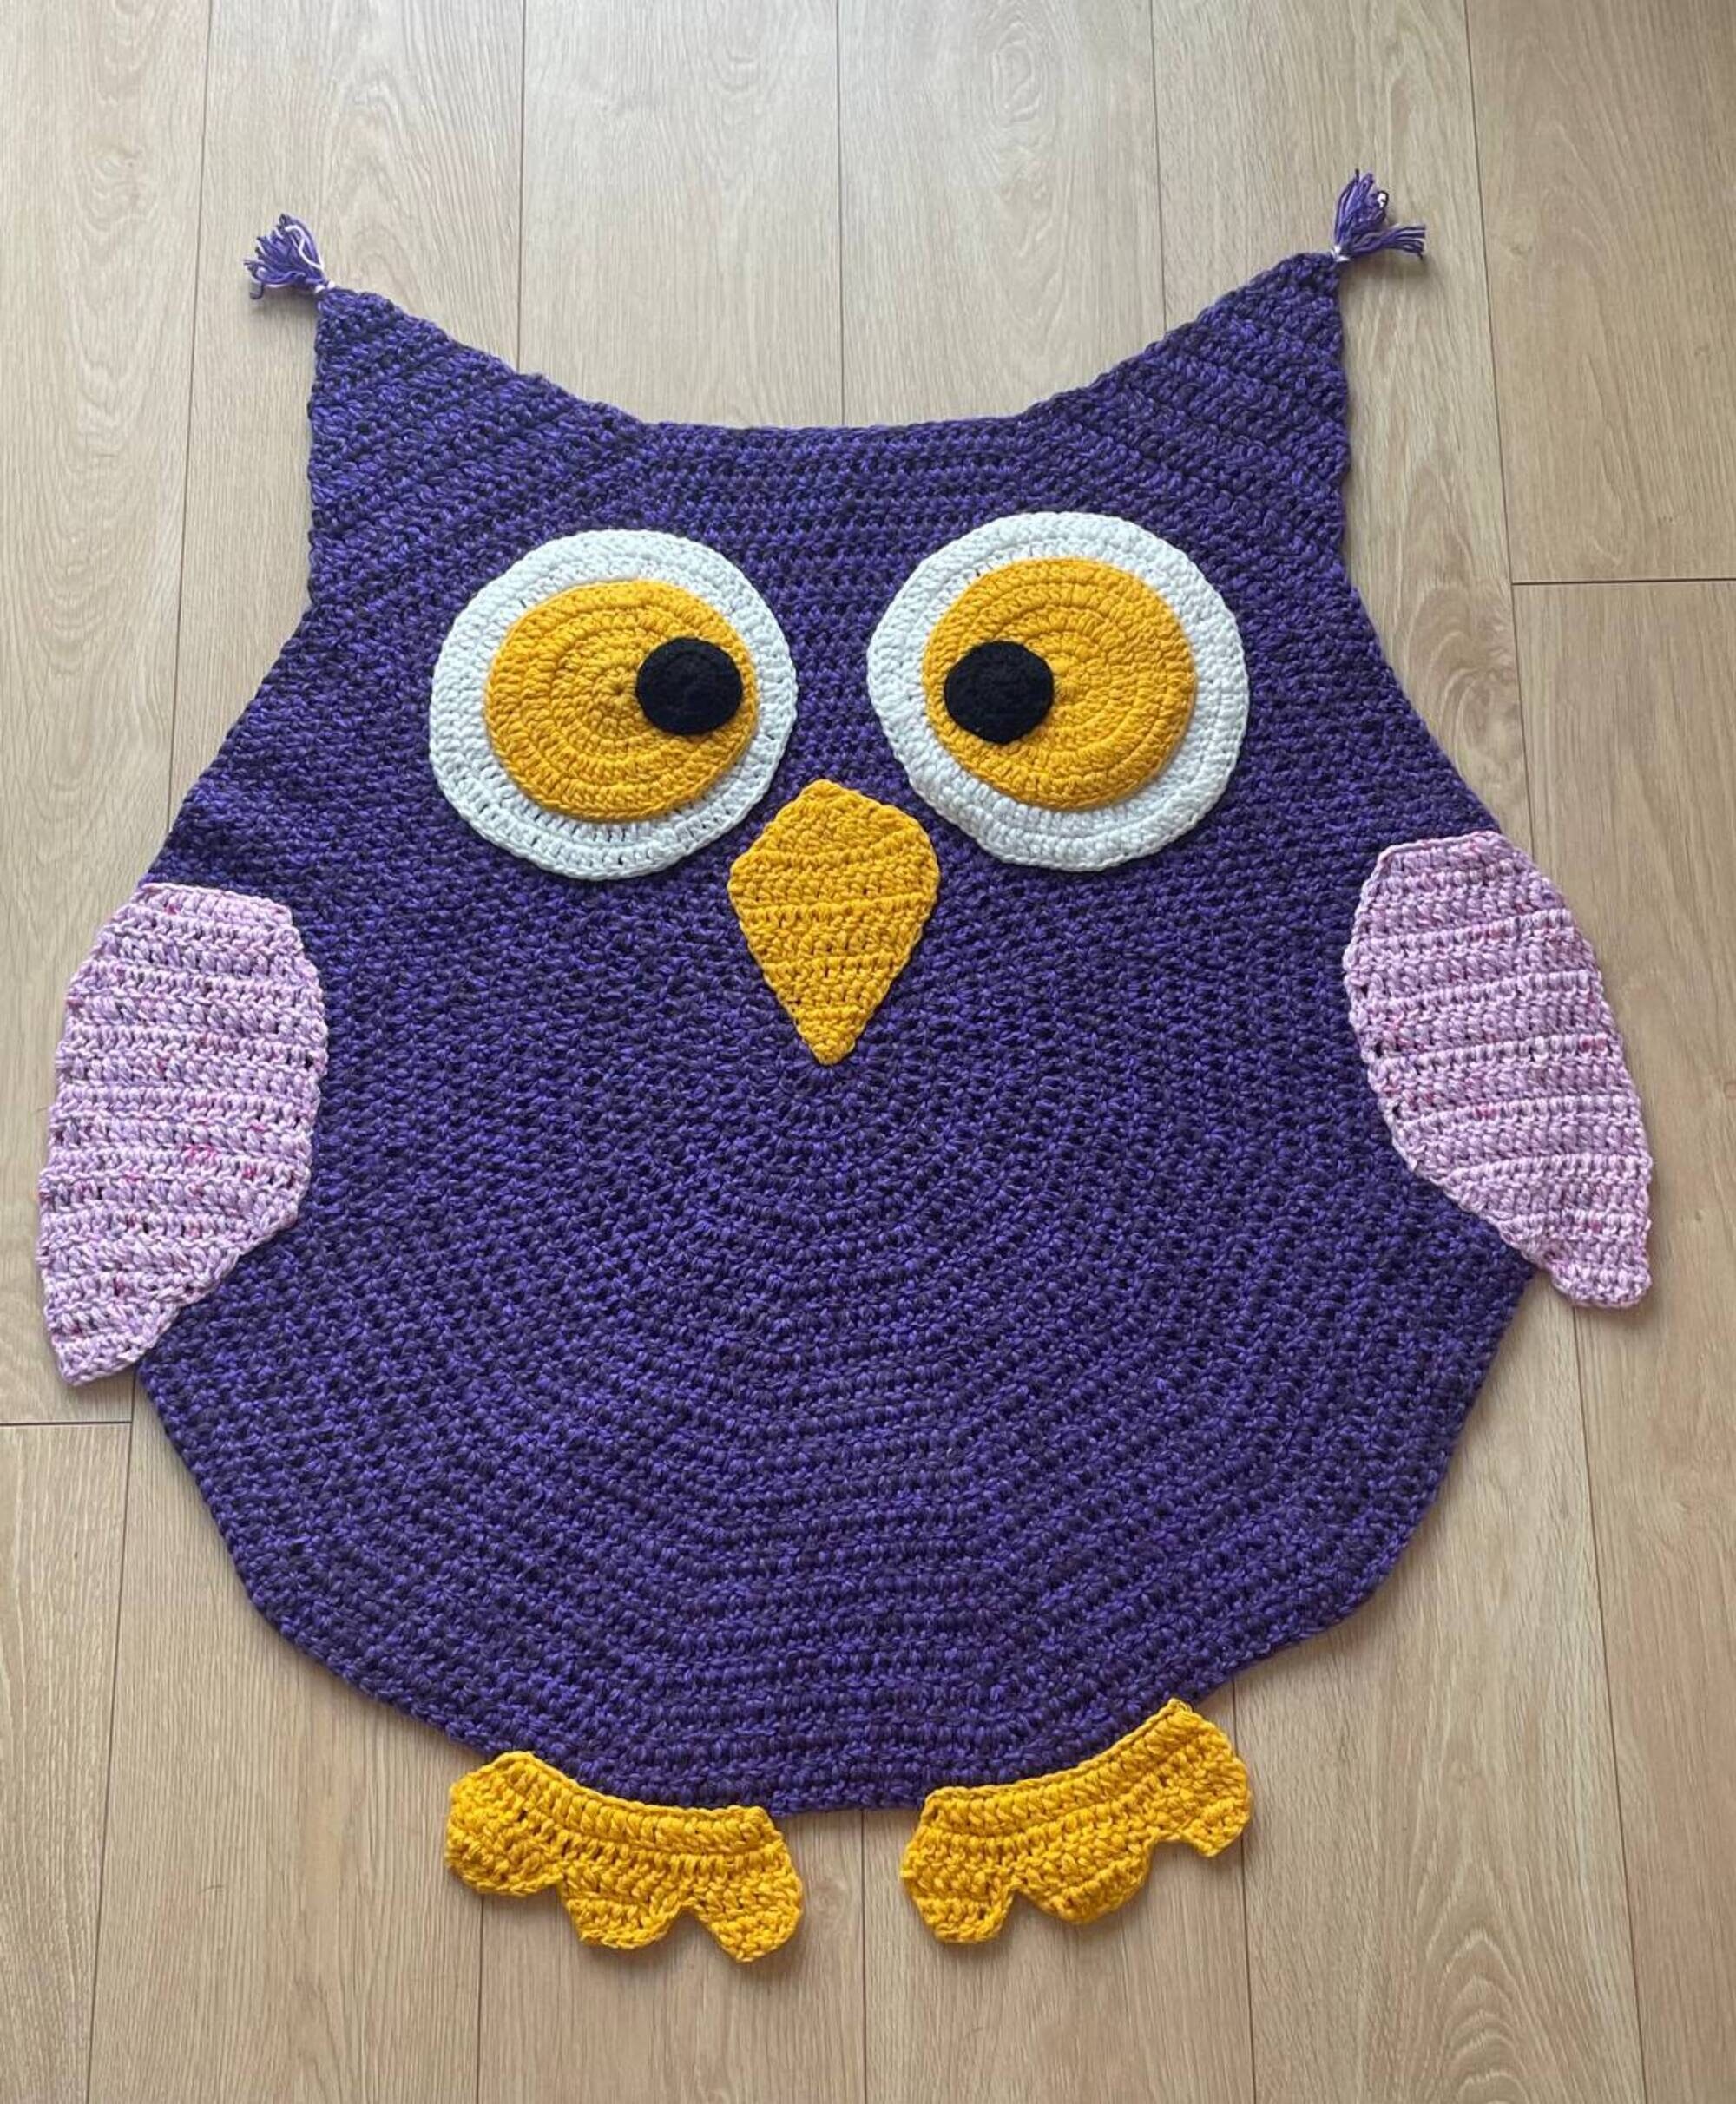 Owl Carpet, Crochet Rug in Nursery, Baby Room Decor